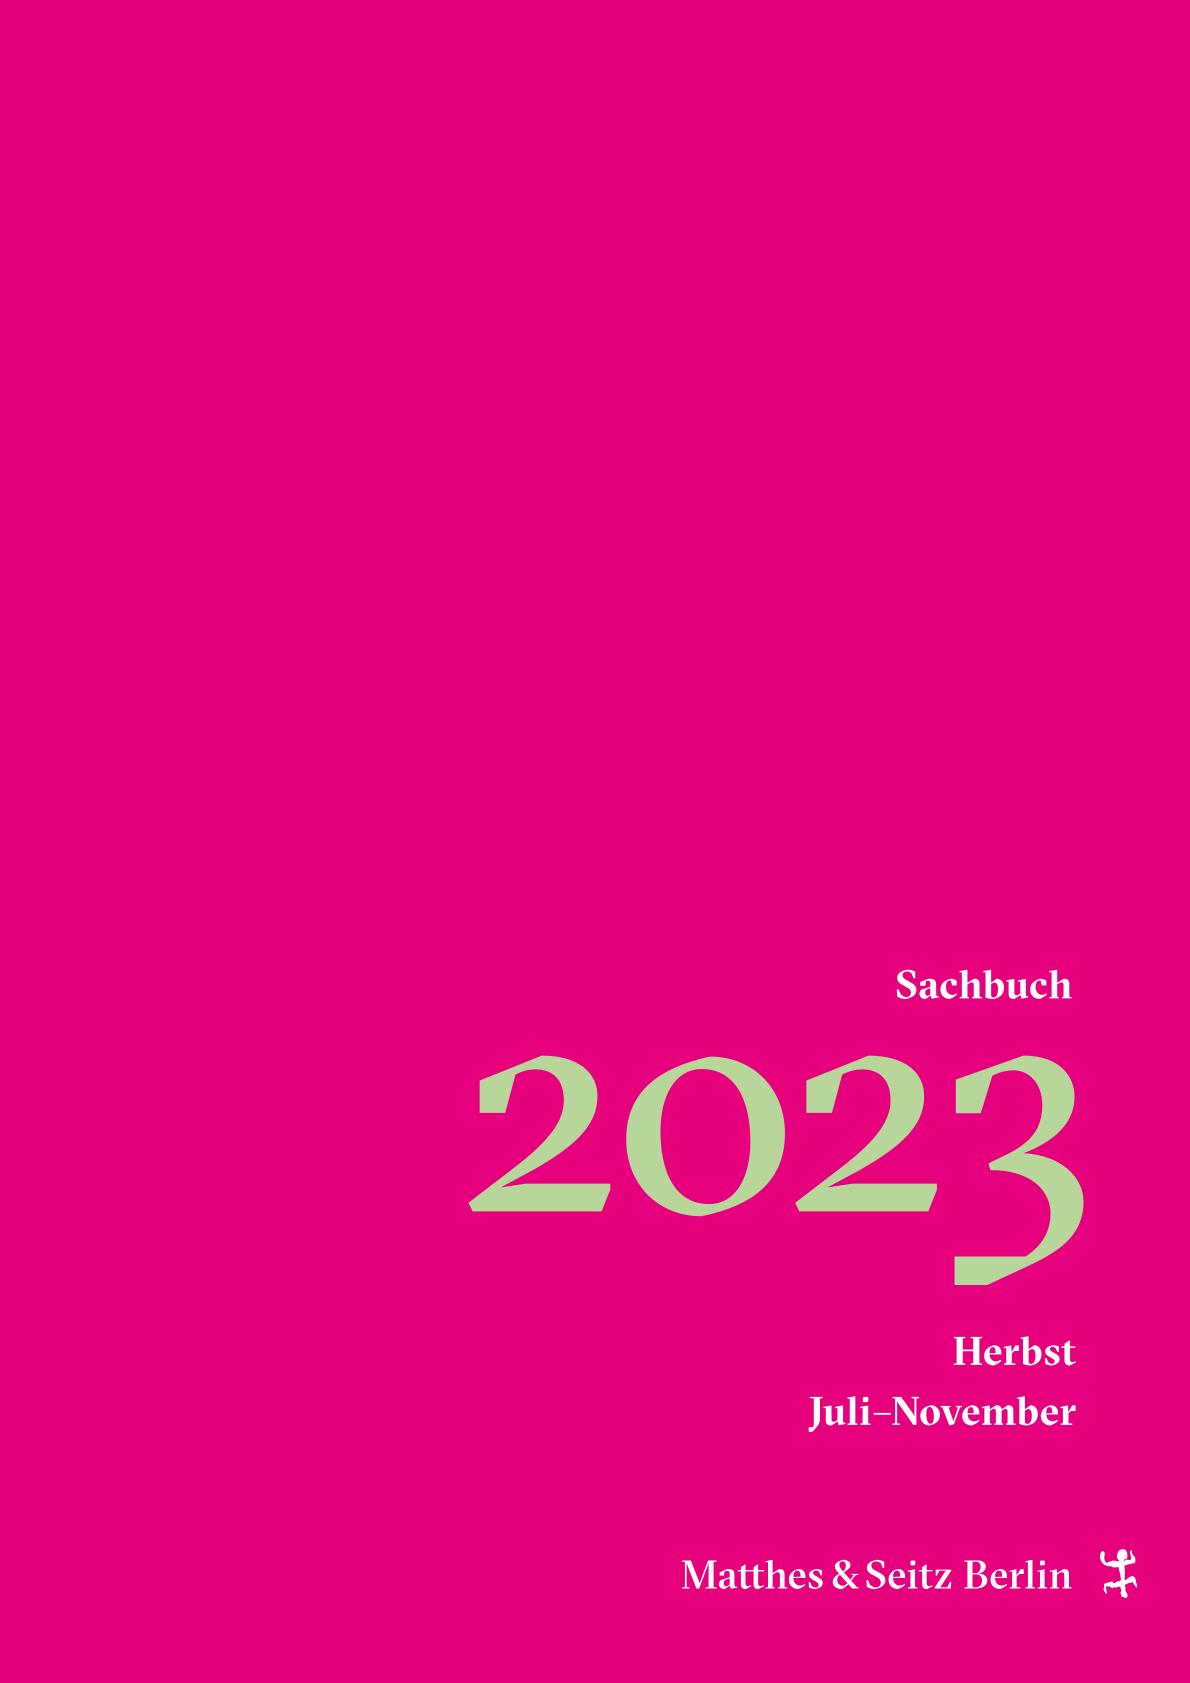 https://www.matthes-seitz-berlin.de/fs/downloads/VorschauHerbst2023/2023_herbst_msb_sachbuch.pdf